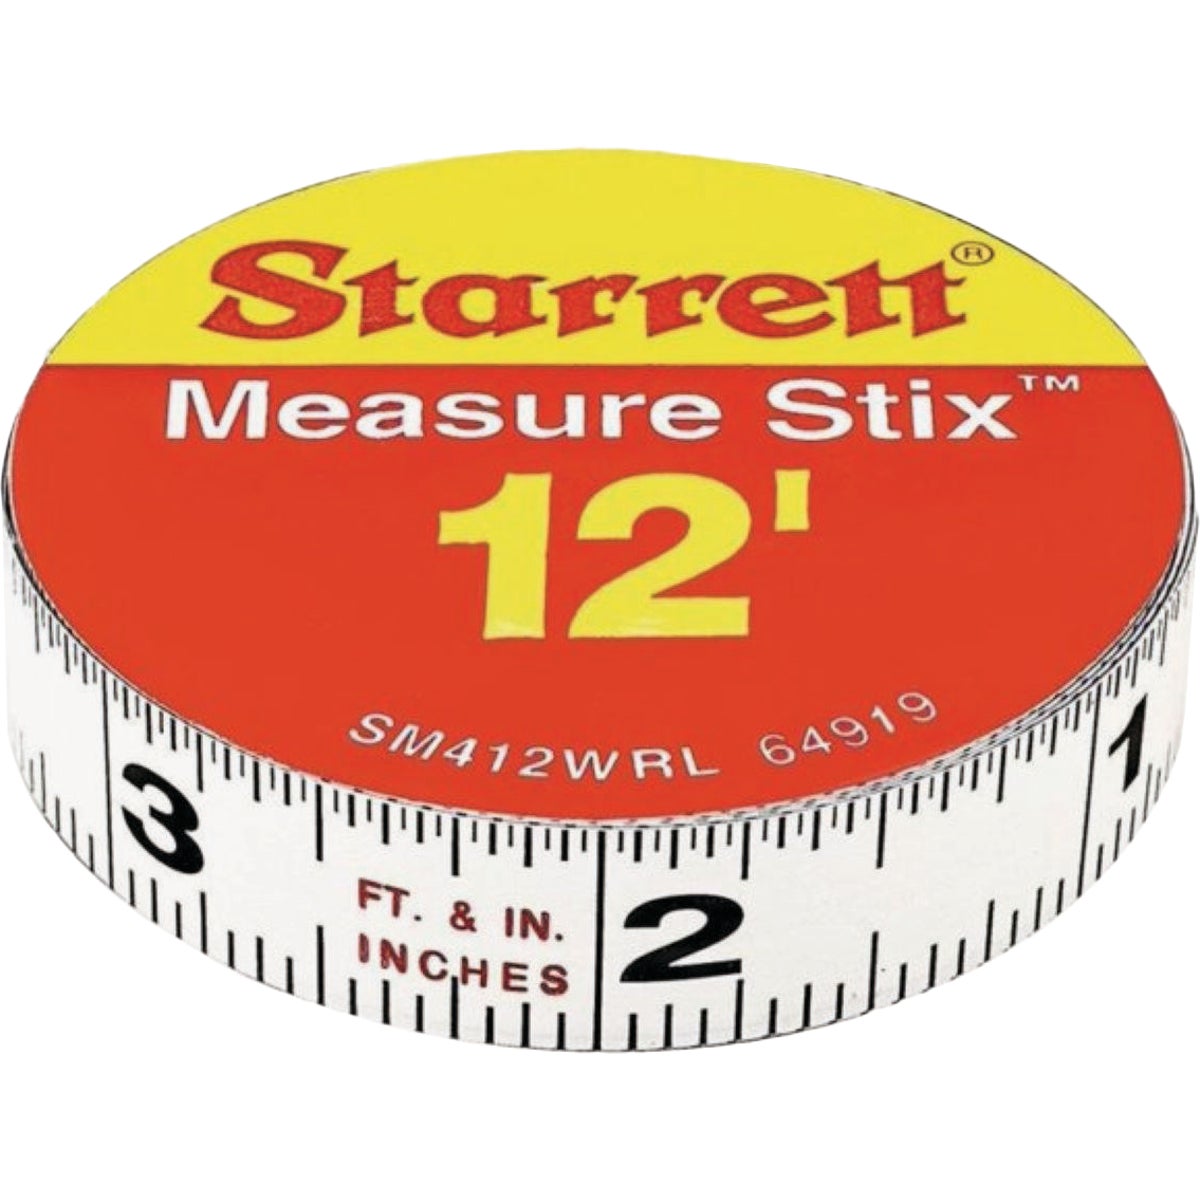 Starrett 12 Ft. SAE Steel Self Adhesive Measuring Tape (Right-to-Left)